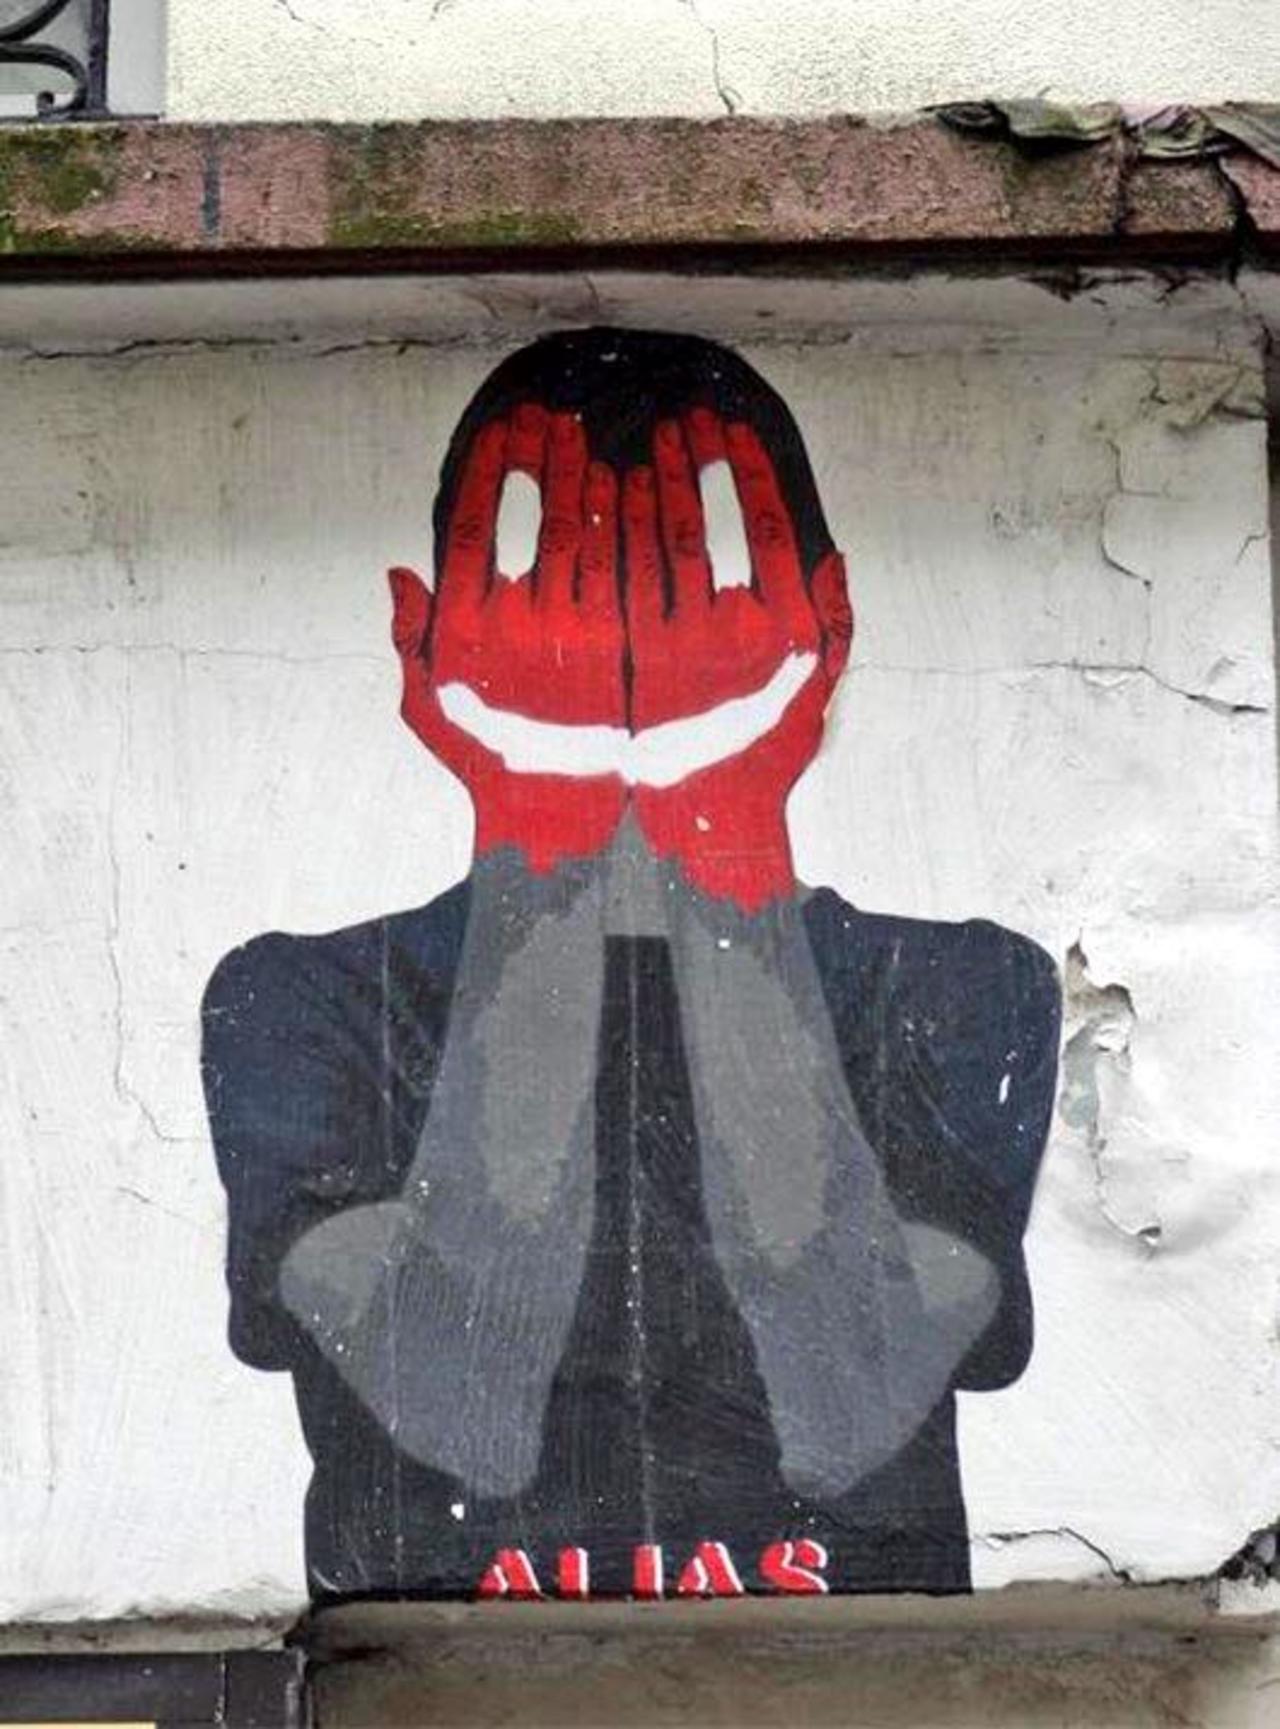 “@Pitchuskita: Alias 
Paris, France
#streetart #art #graffiti #mural http://t.co/Eyu61CgjZB” Too cool #urbanart